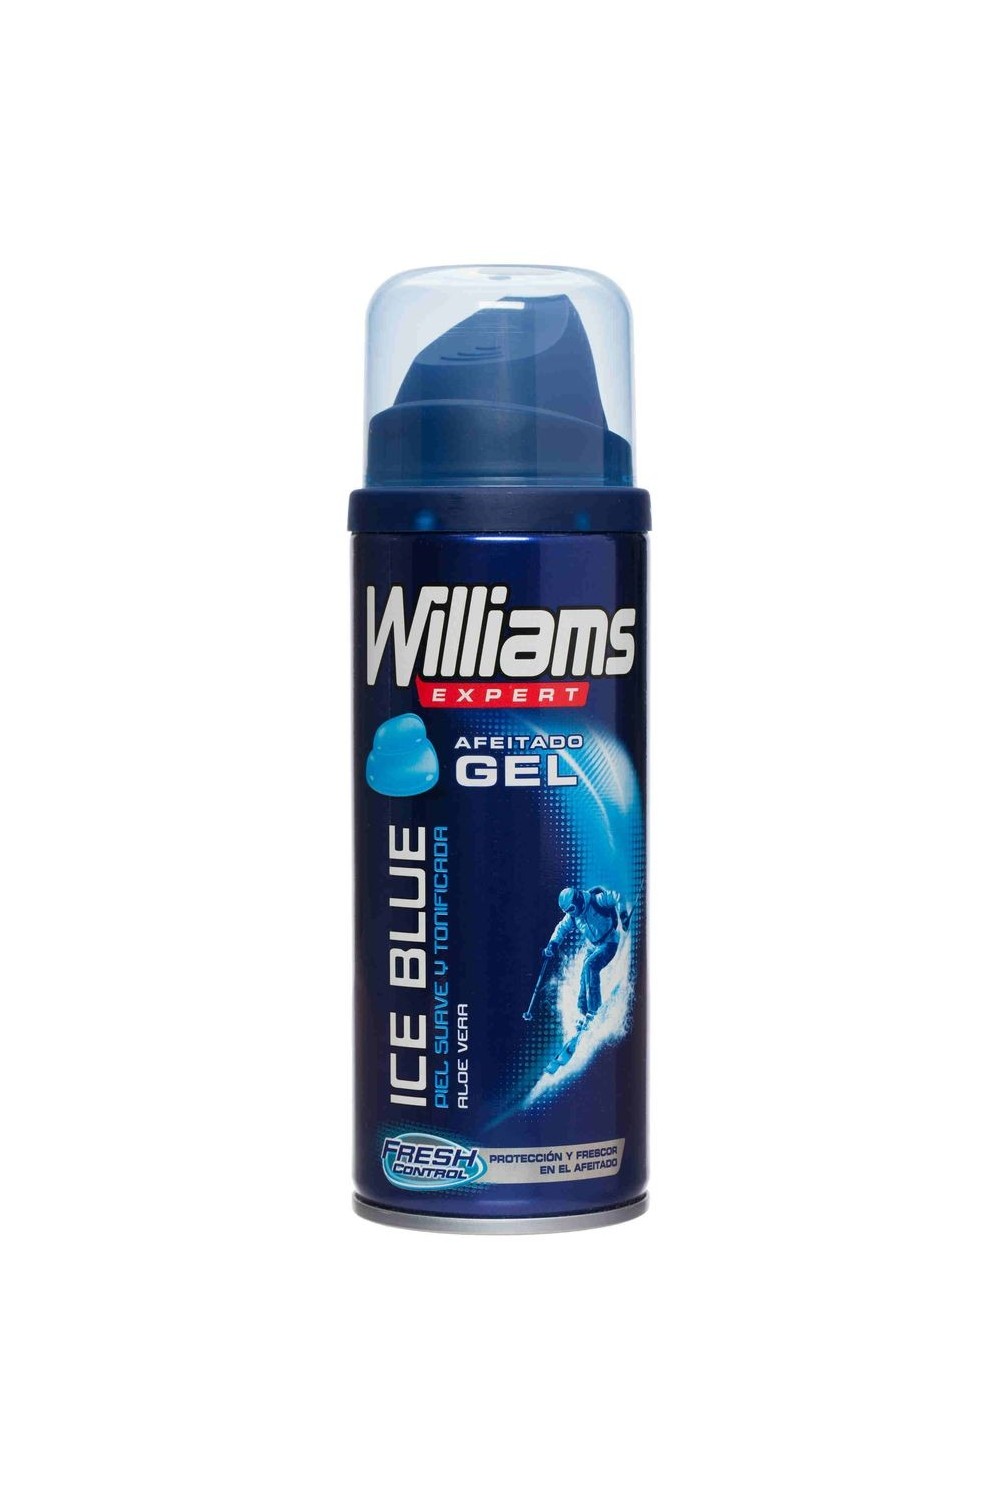 WILLIAMS EXPERT - Williams Shaving Gel Ice Blue 200ml